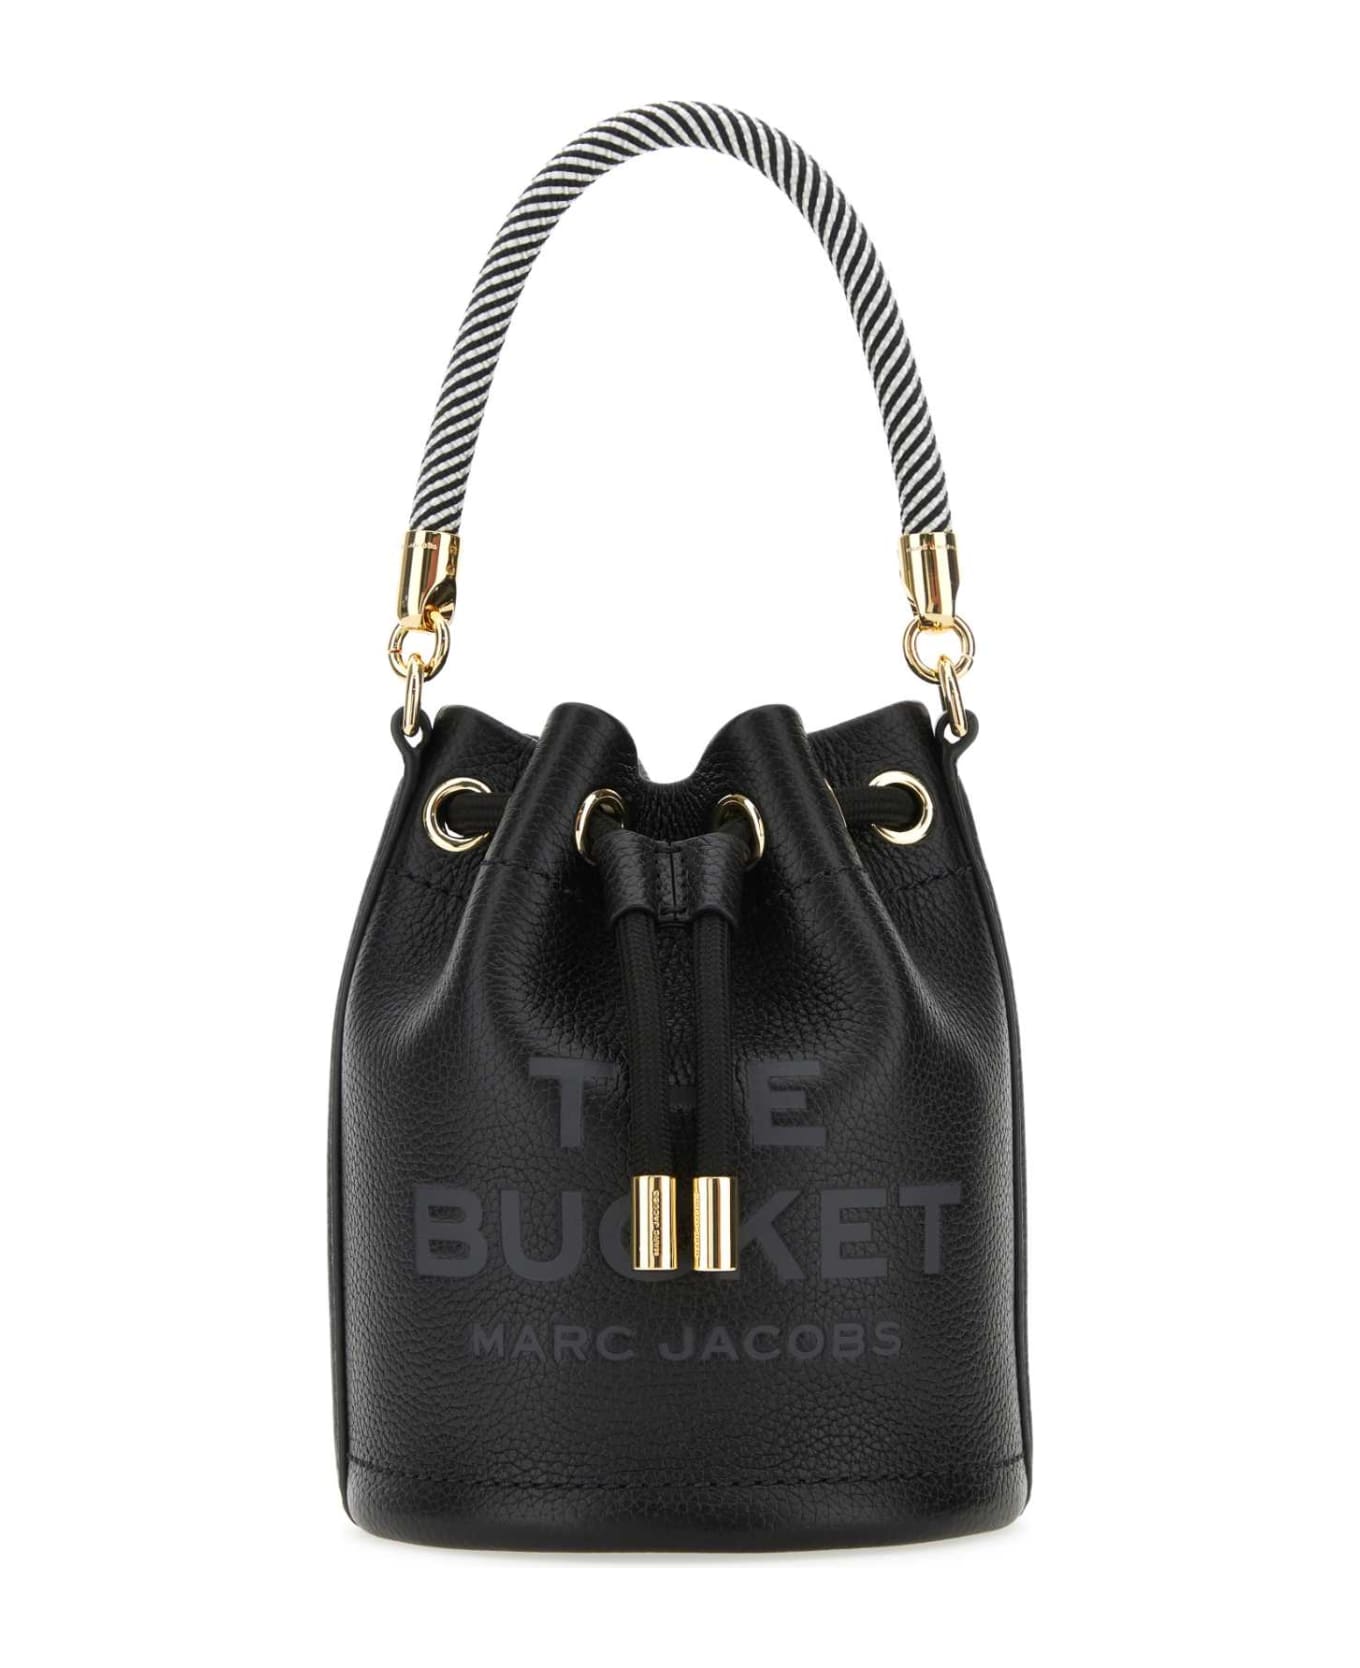 Marc Jacobs Black Leather Micro The Bucket Bucket Bag - 001